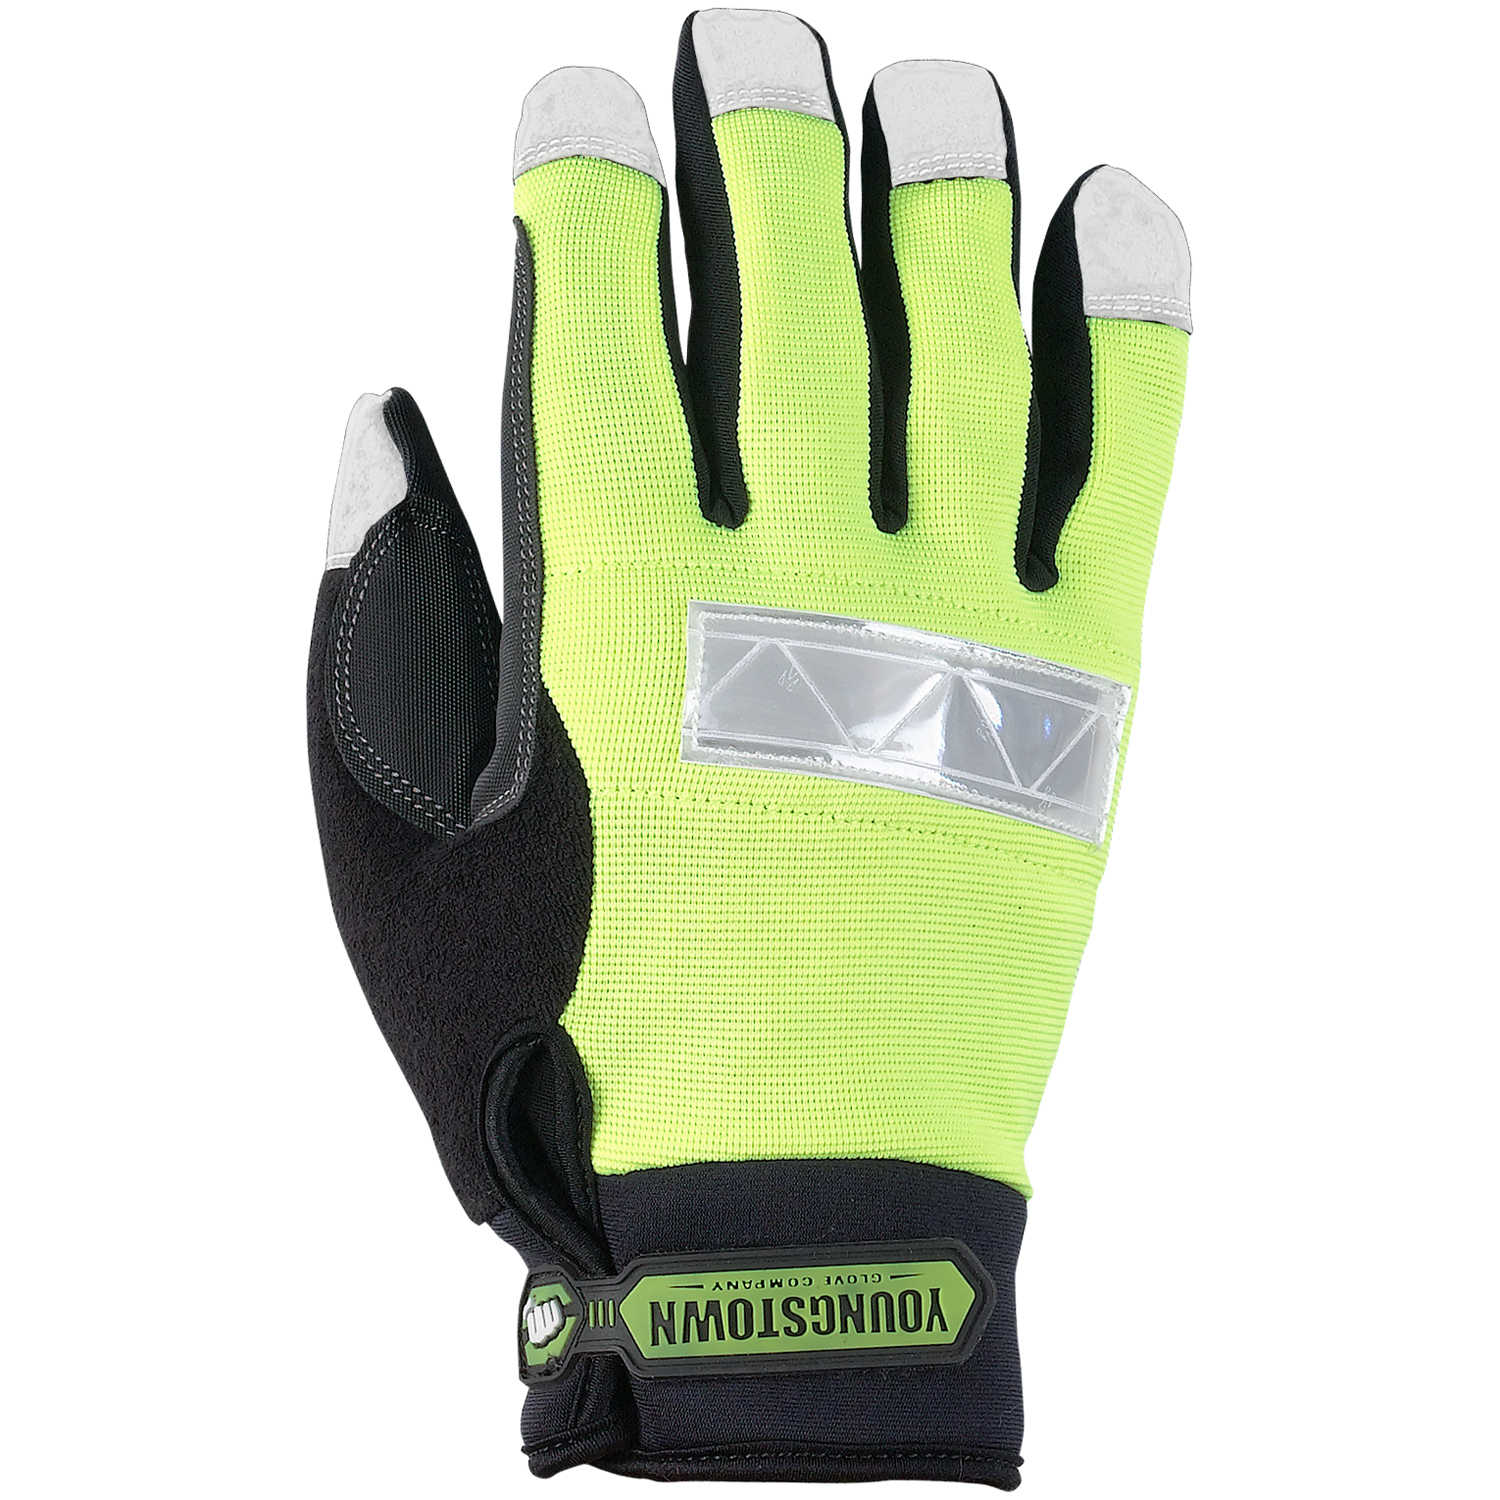 Youngstown Waterproof Winter Gloves Medium